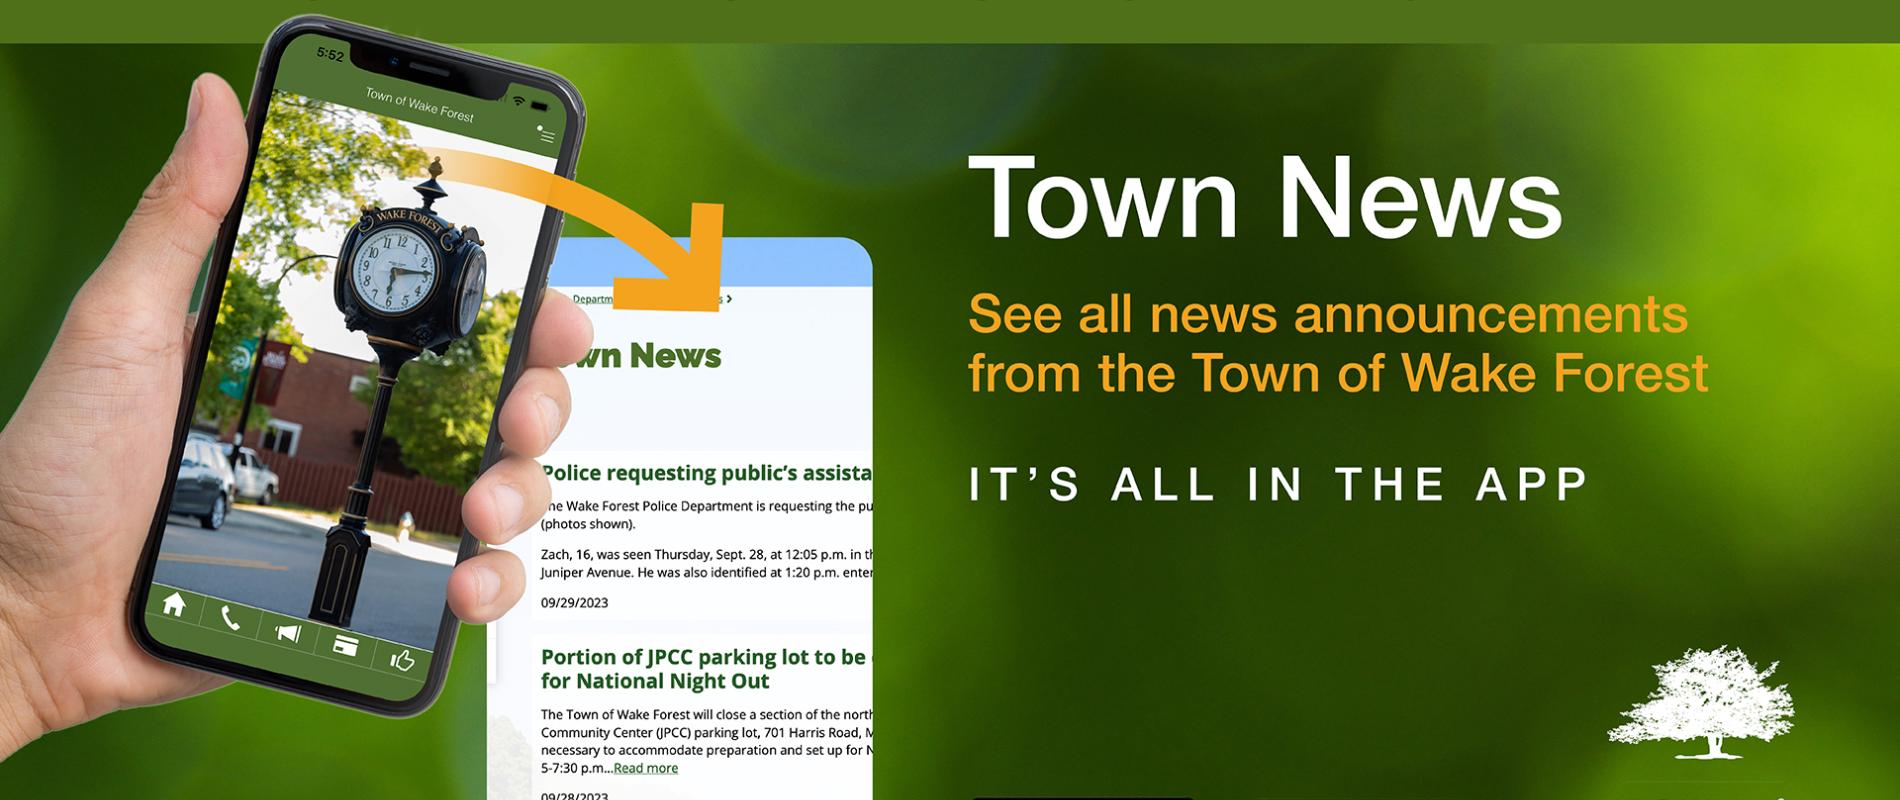 Town App